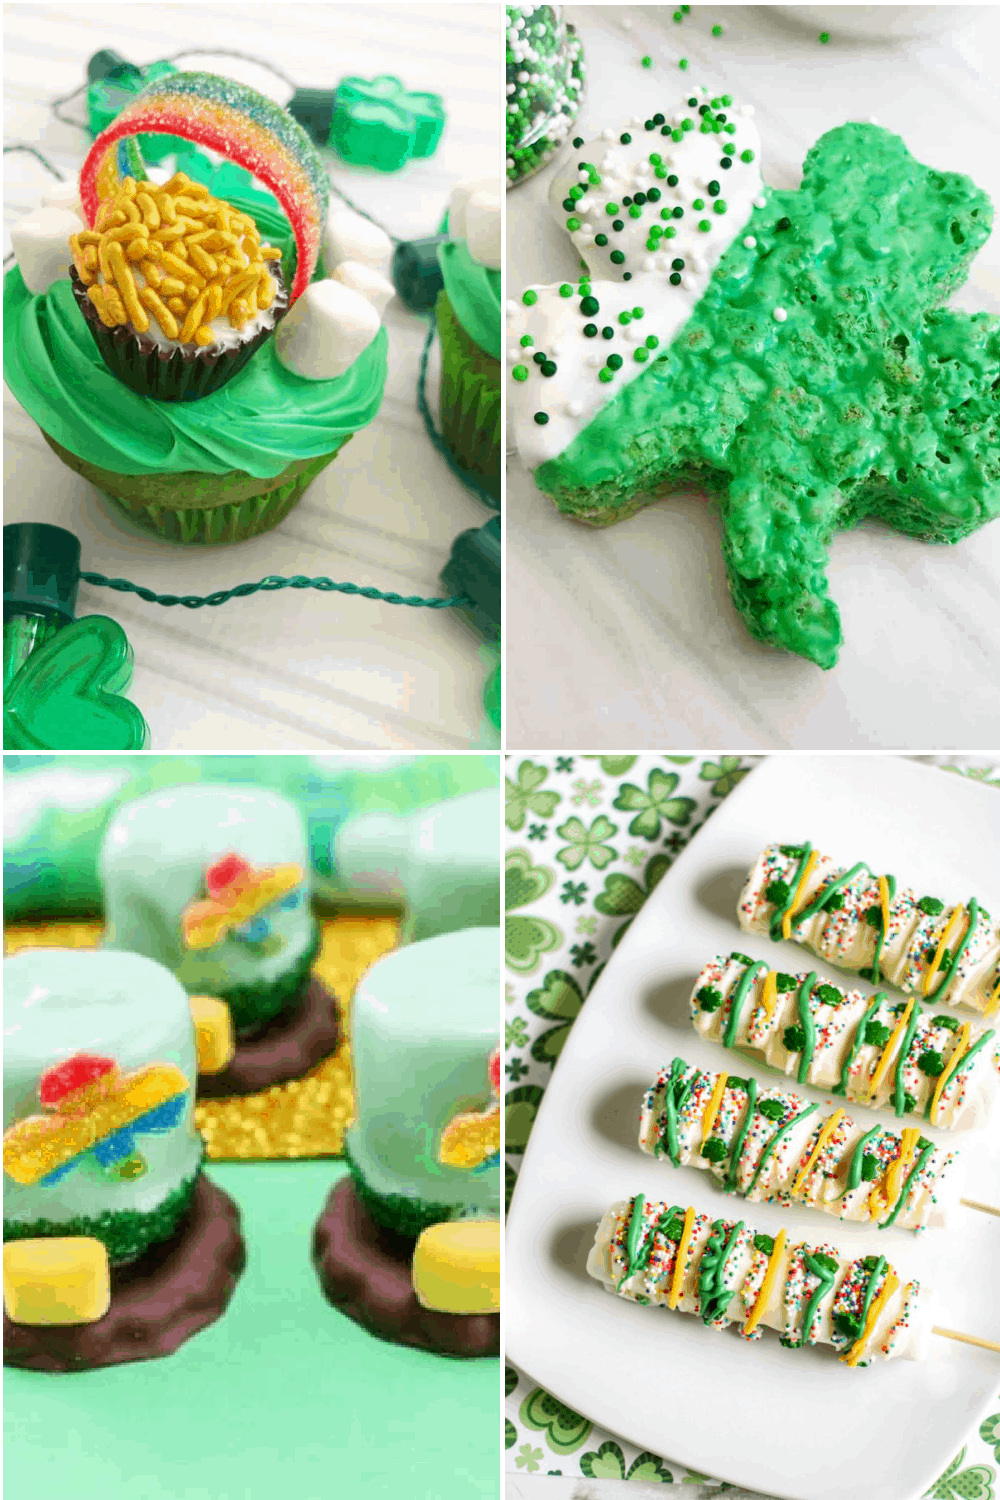 Fun & Festive St. Patrick’s Day Desserts for Kids